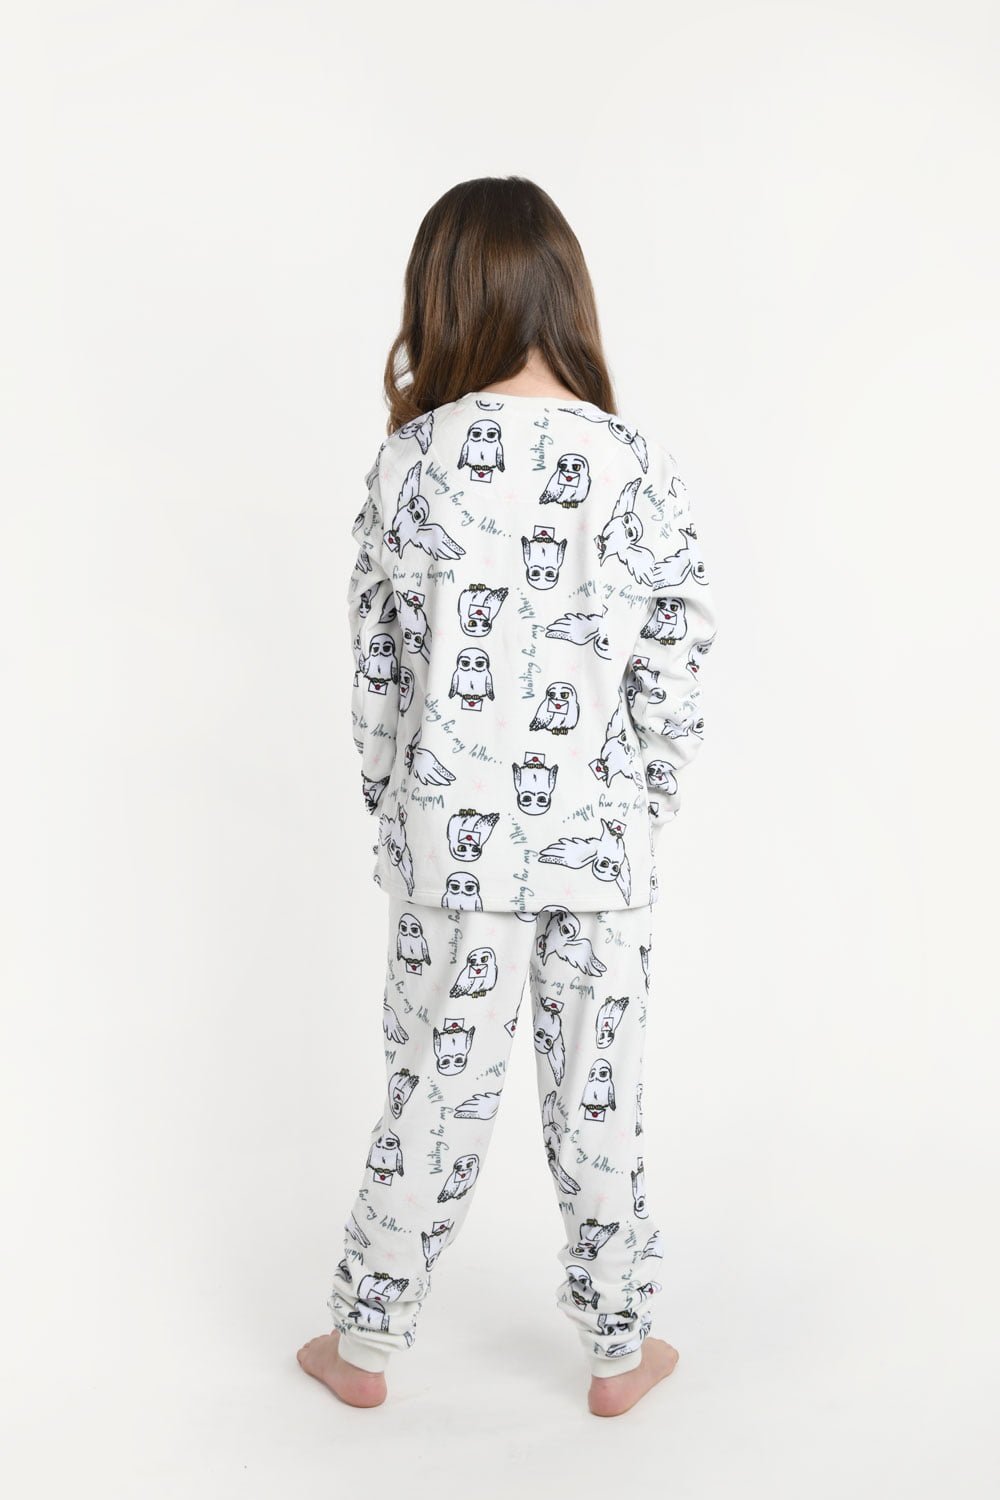 Brand Threads Kids' Sonic the Hedgehog Fleece Pyjamas, Blue/Multi